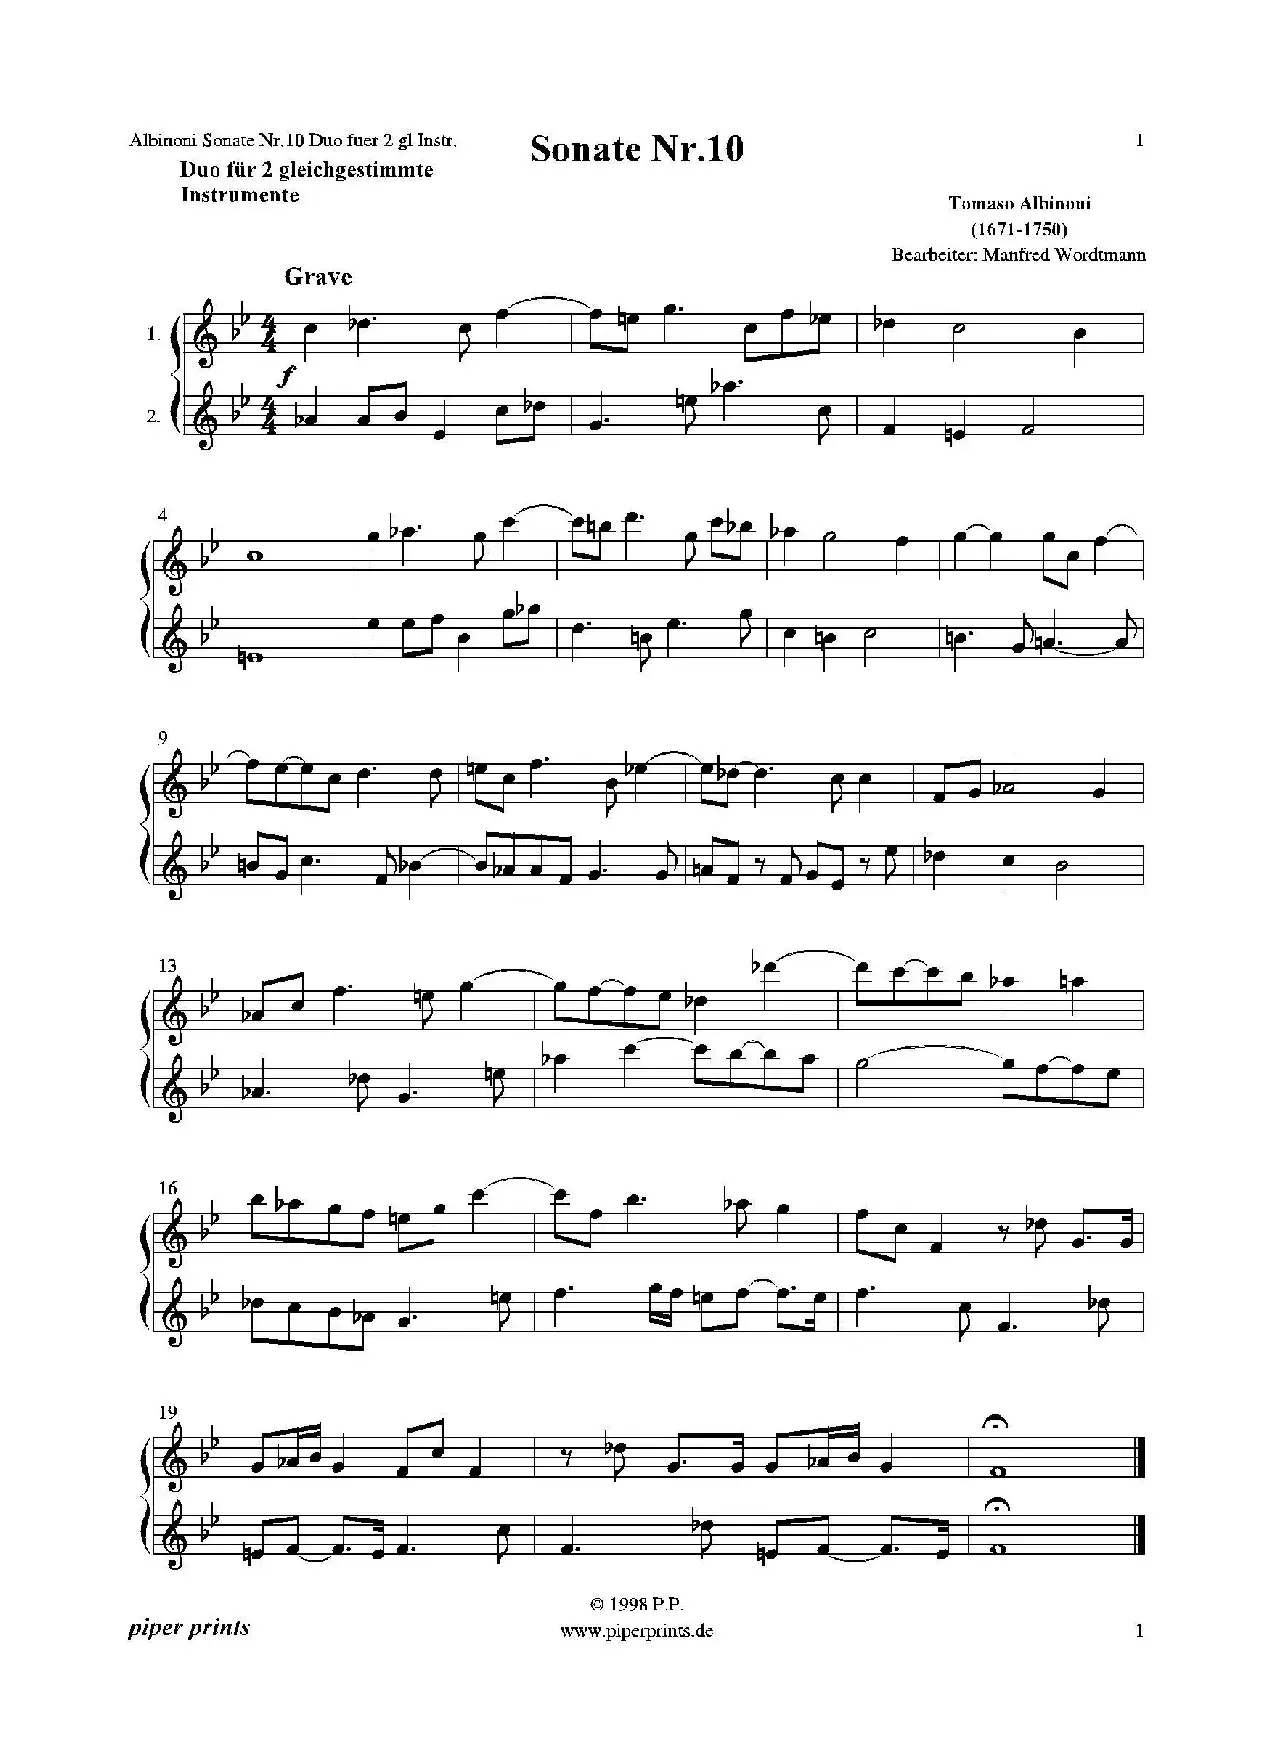 Sonate Nr.10（二重奏）